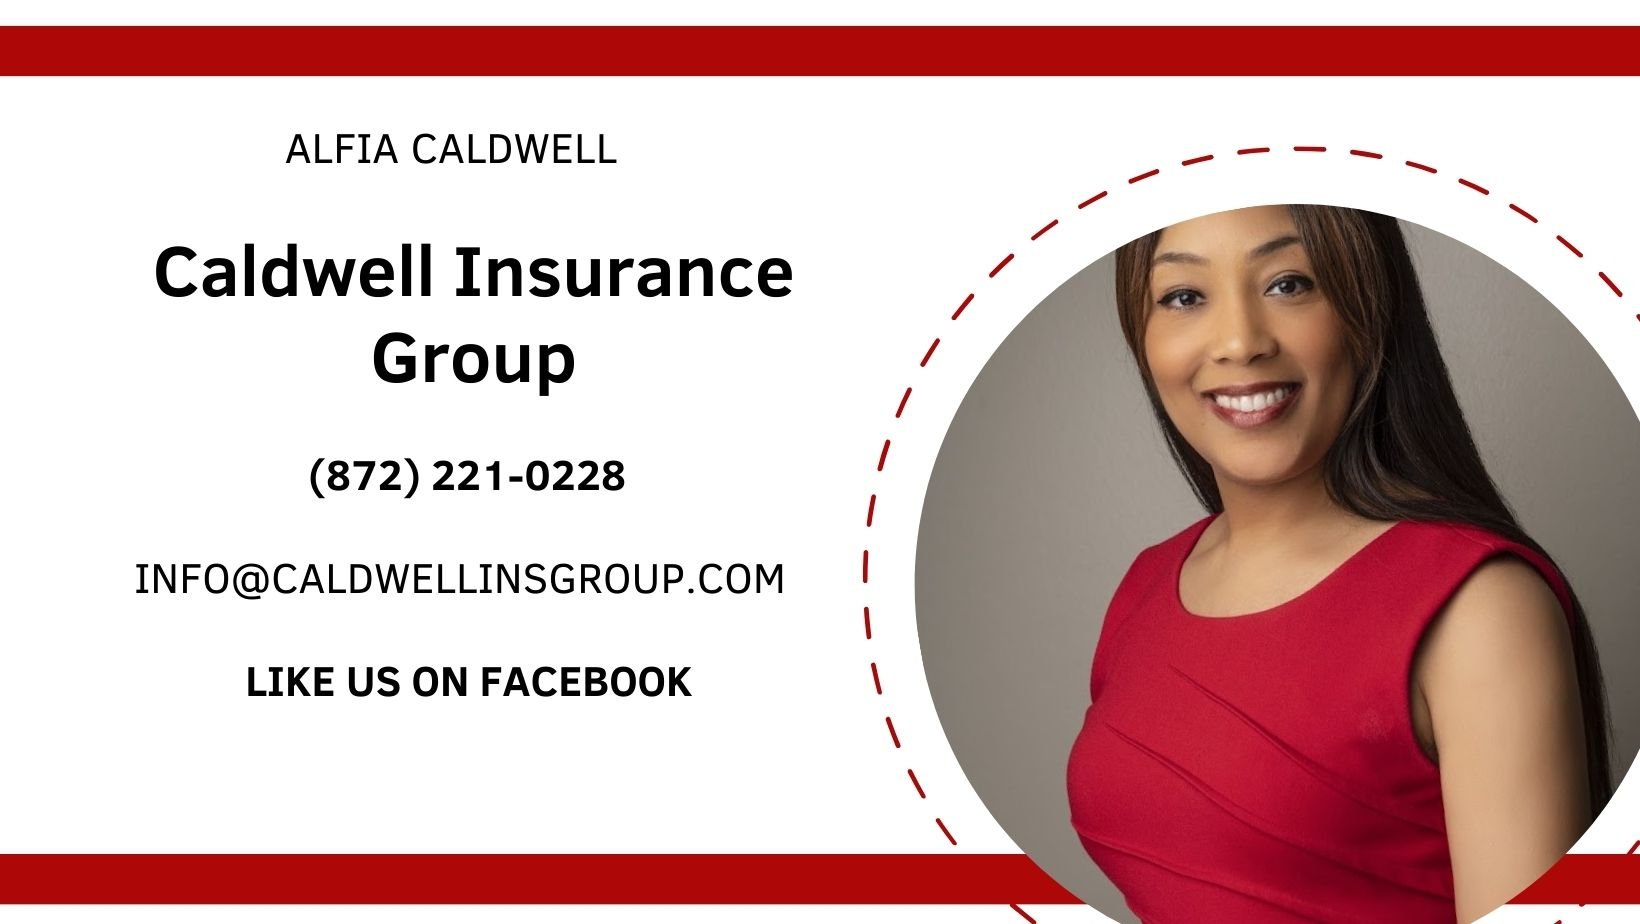 Alfia Caldwell - Caldwell Insurance Group-1